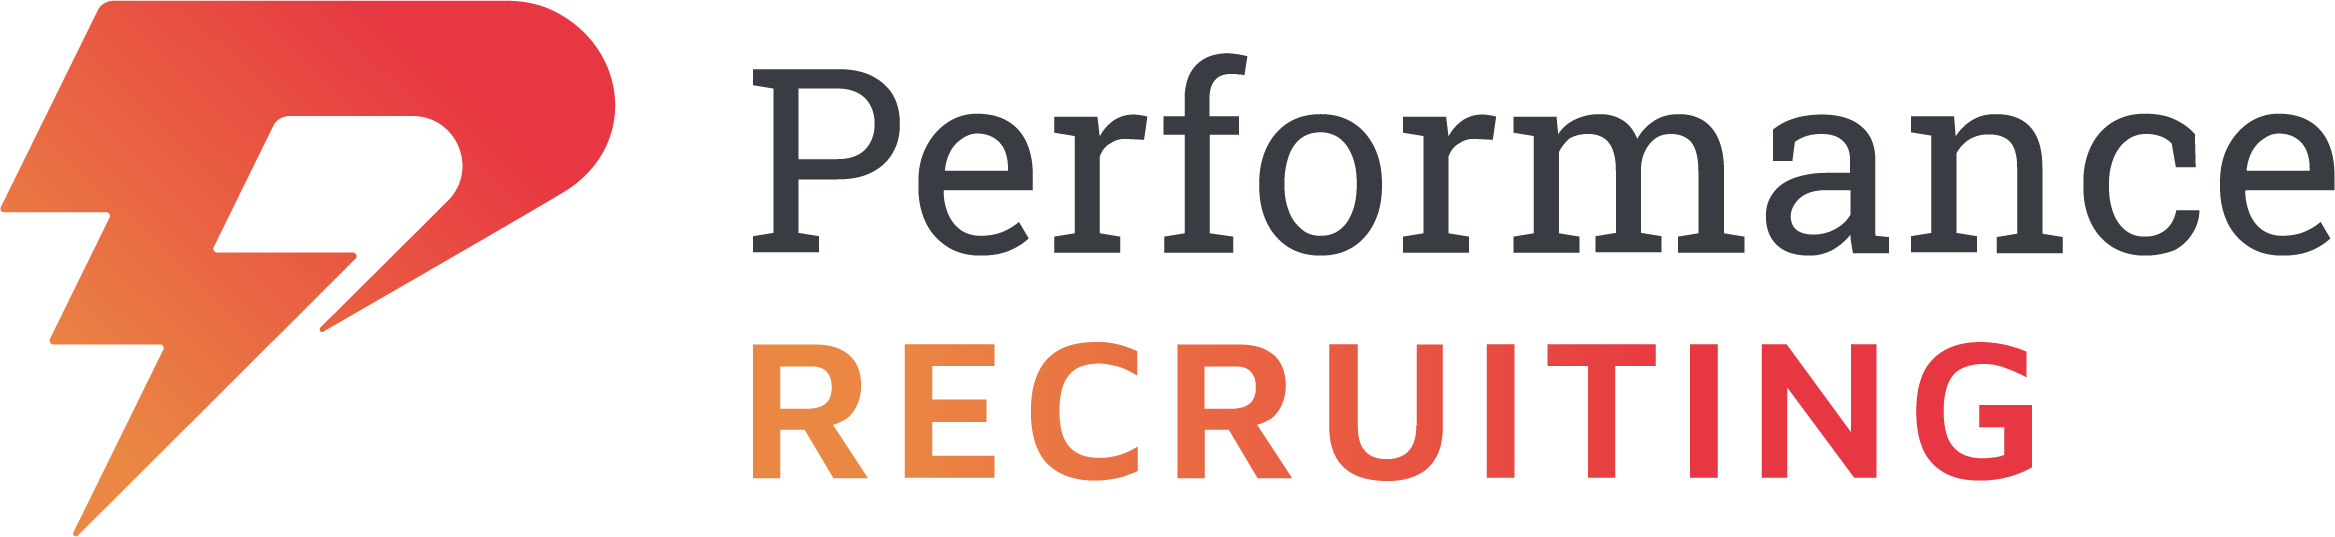 Performance Recruiting GmbH Logo